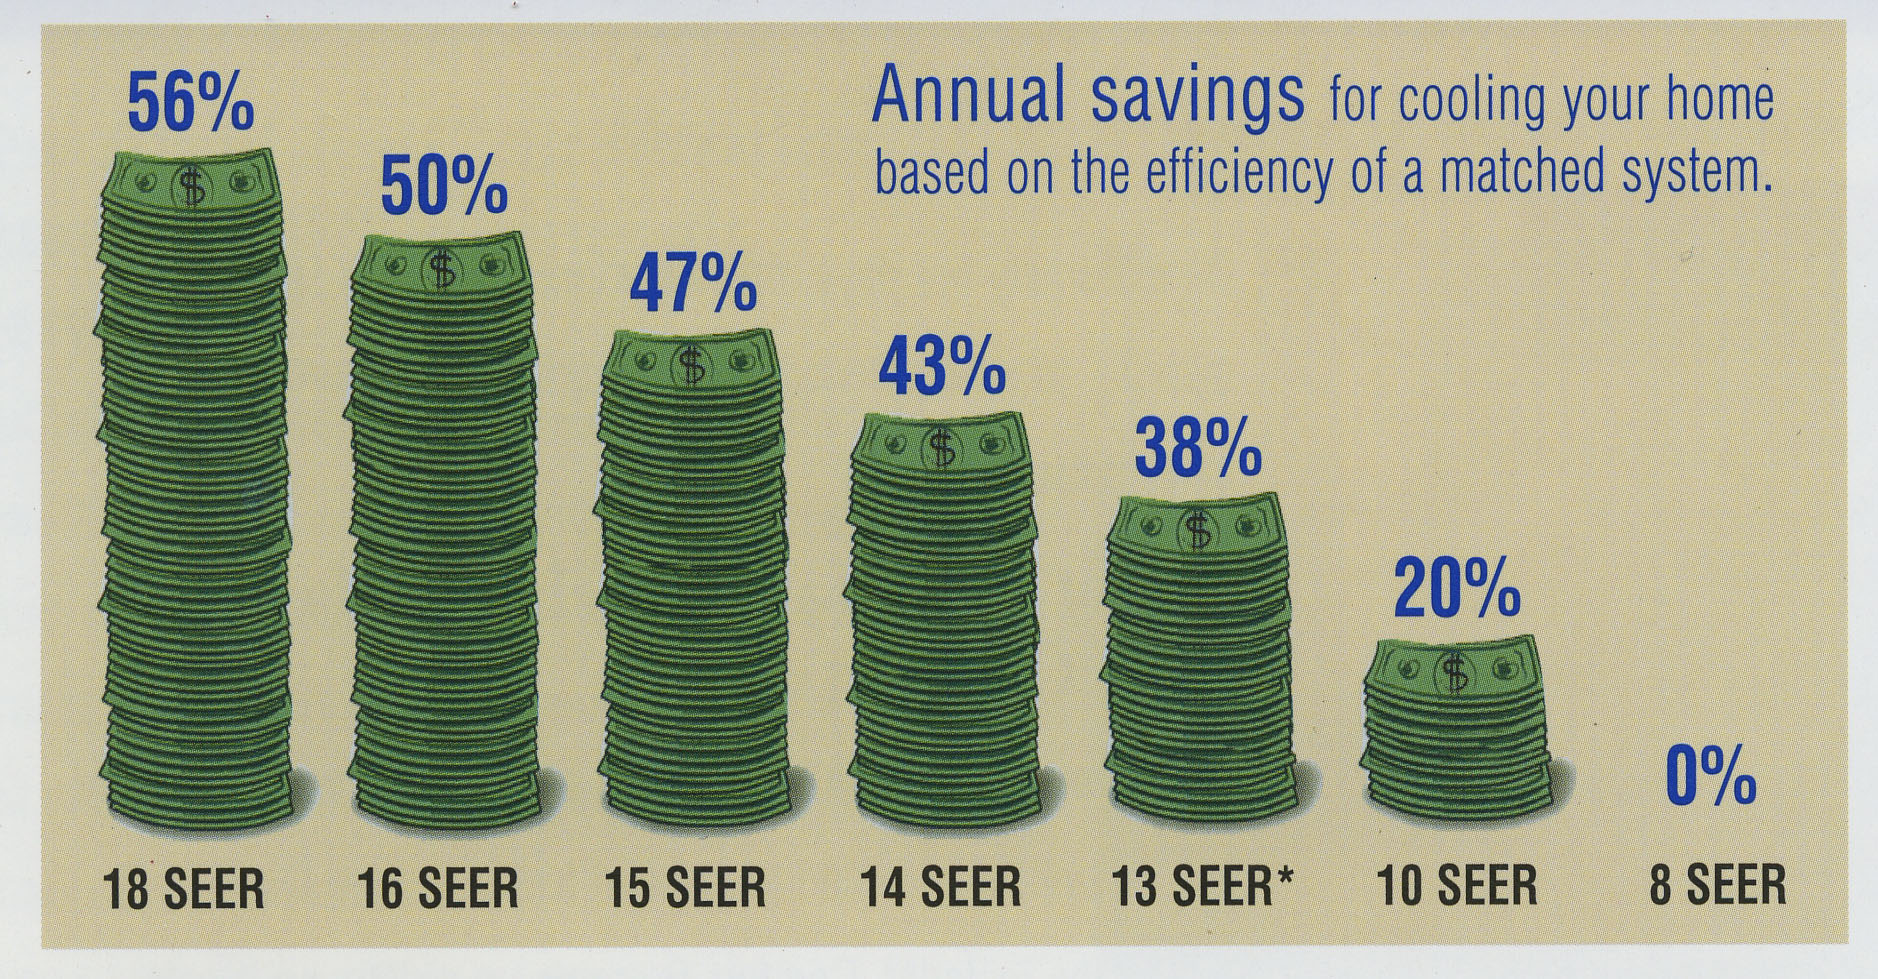 Seer Rating Savings Chart